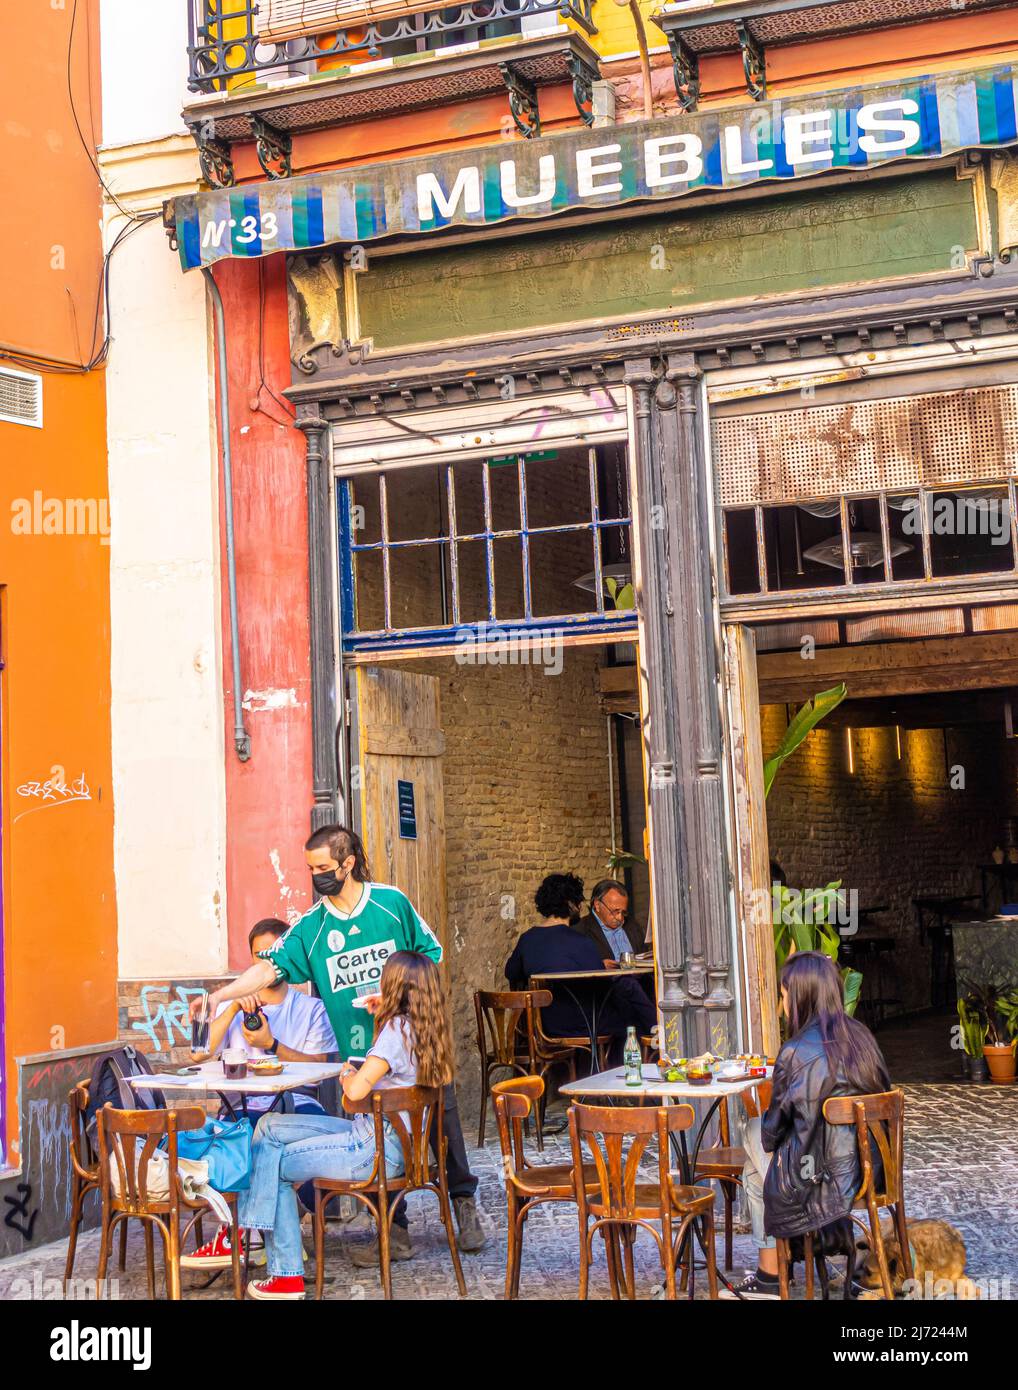 Café Muebles mit libanesischer Küche. Libanesische Restaurants in Sevilla, Andacia, Spanien Stockfoto